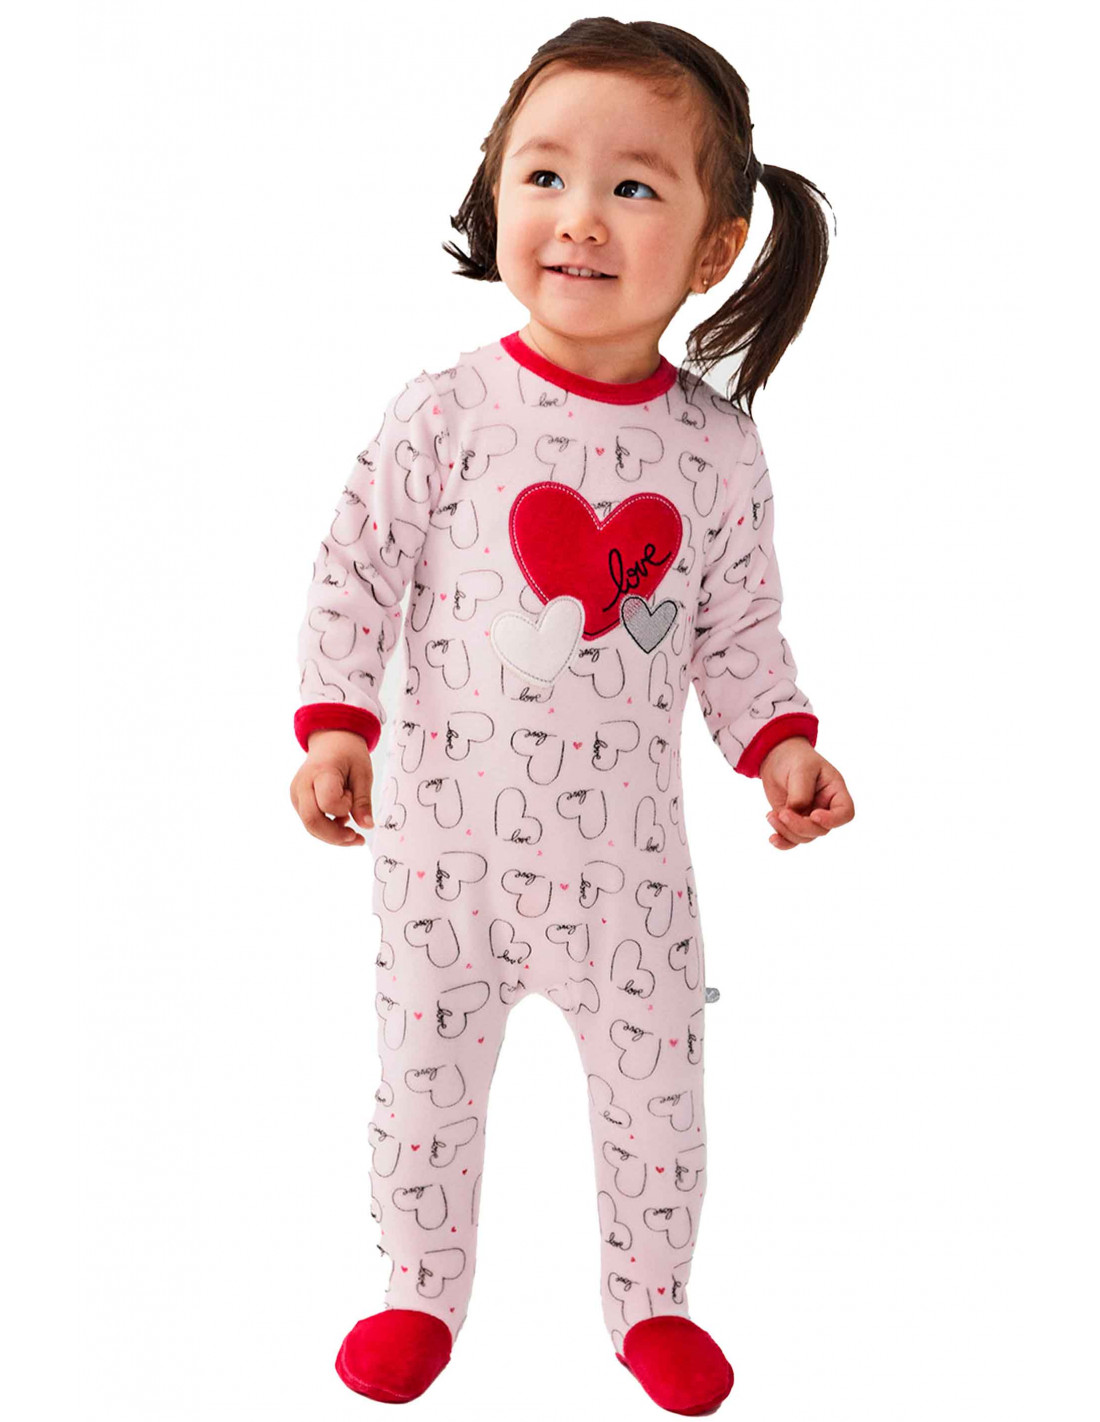 Pijama de bebé modelo “22200443” de marca